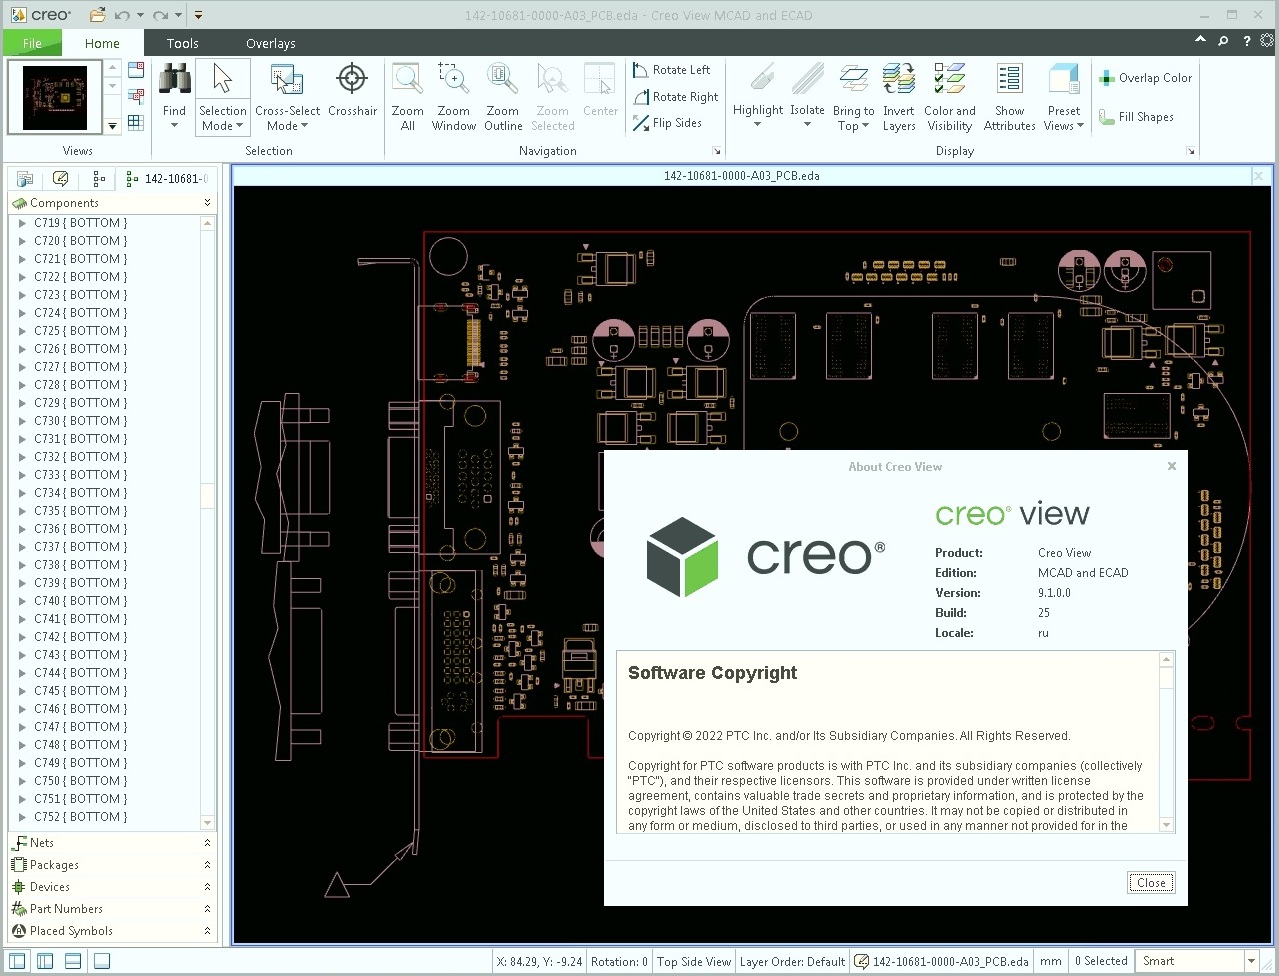 Working with PTC Creo View 9.1.0.0 full